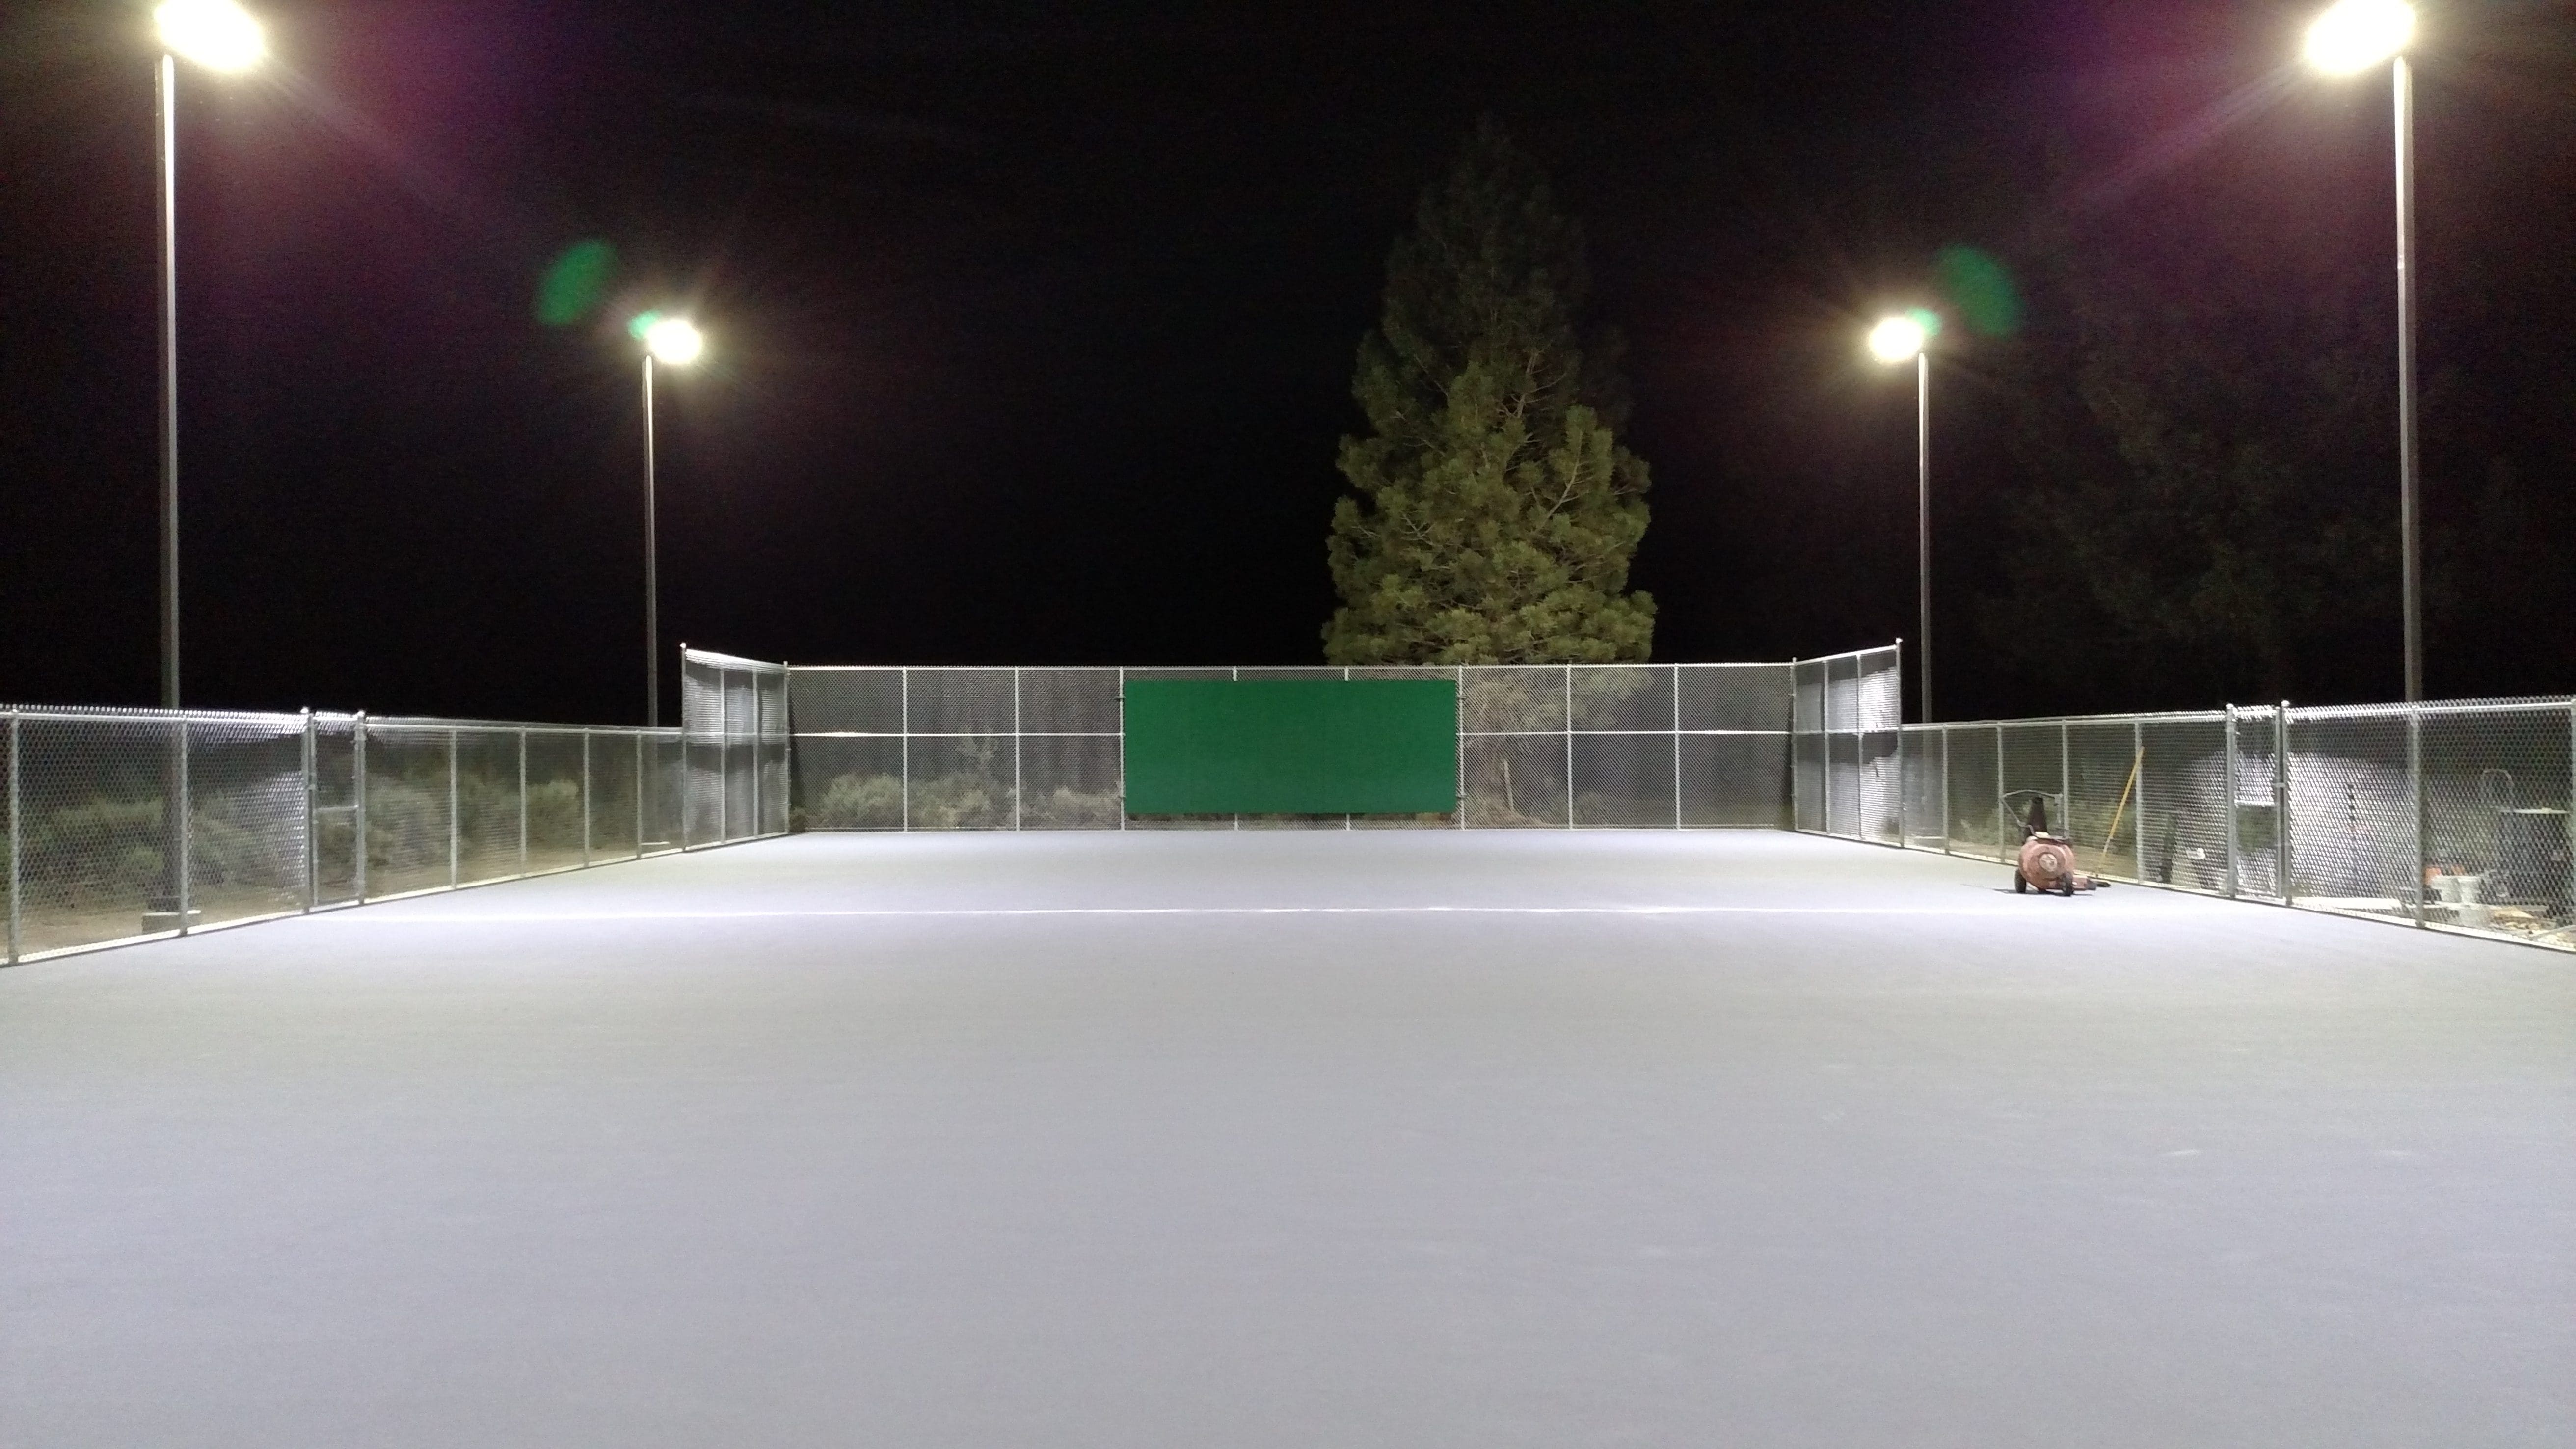 Yosemite Tennis Court Lighting Gets Major Upgrade